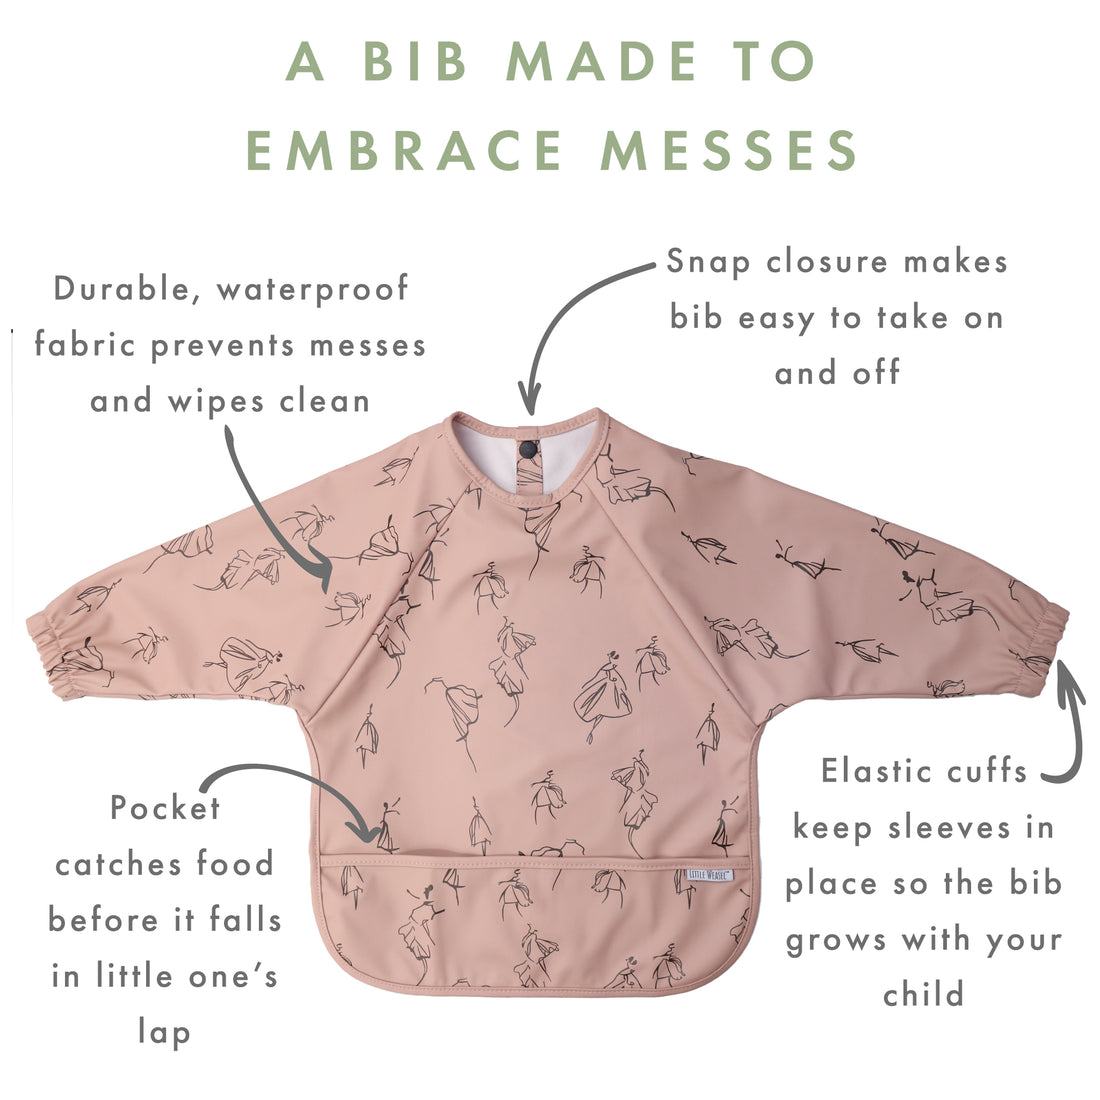 Embrace the Mess Bib